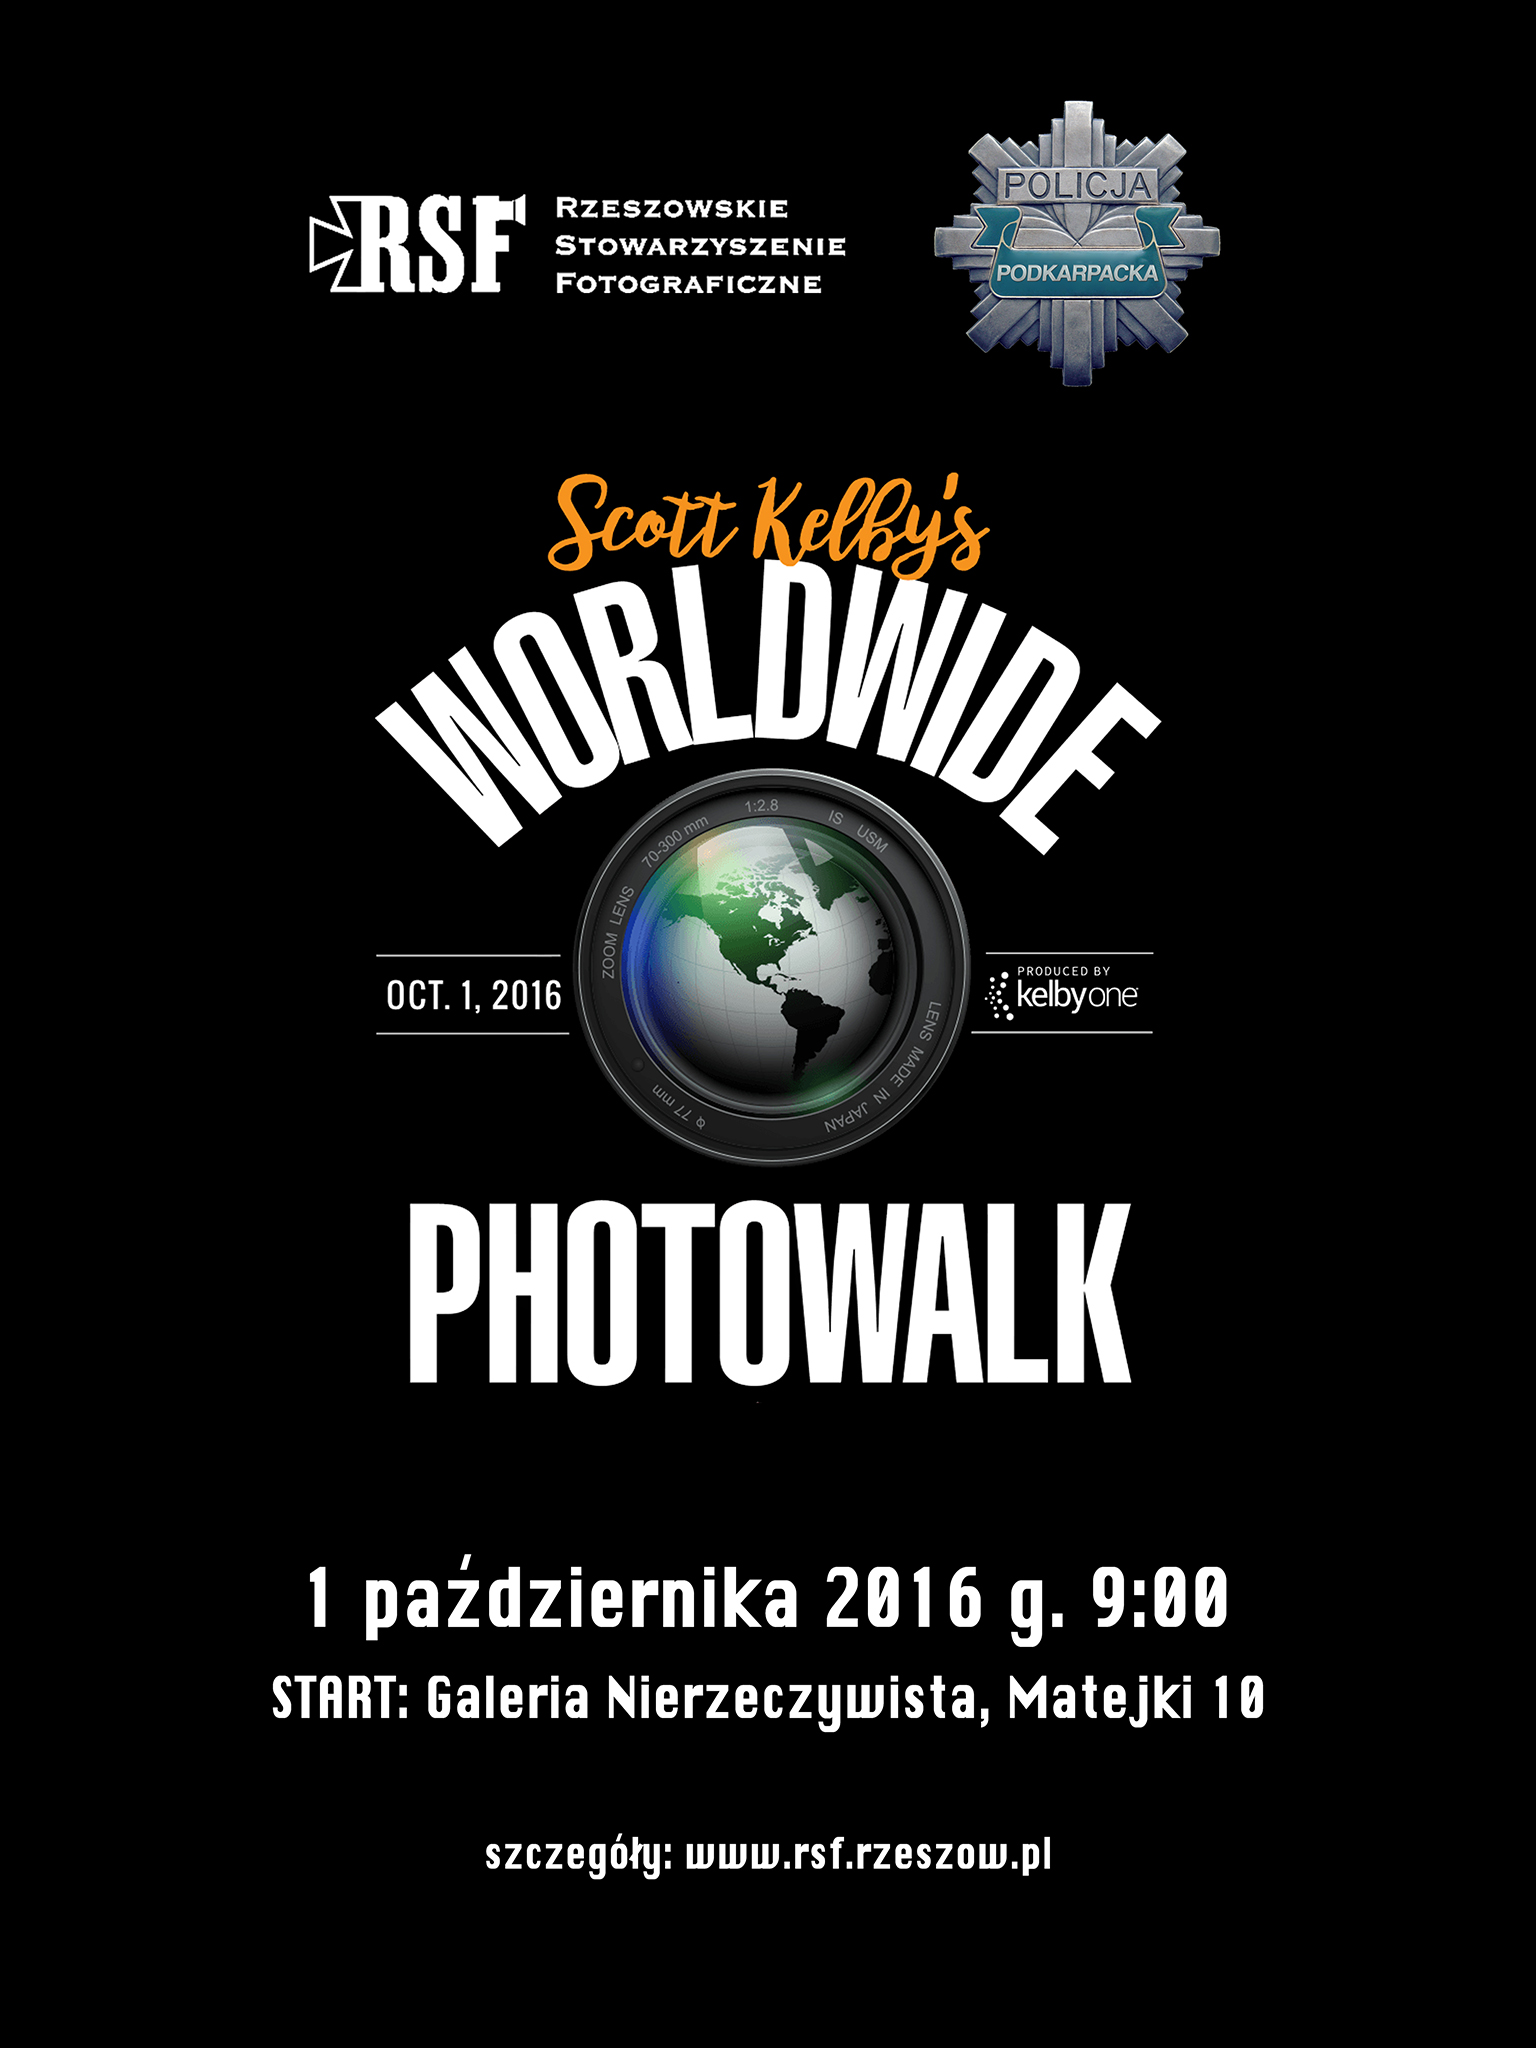 Worldwide Photowalk